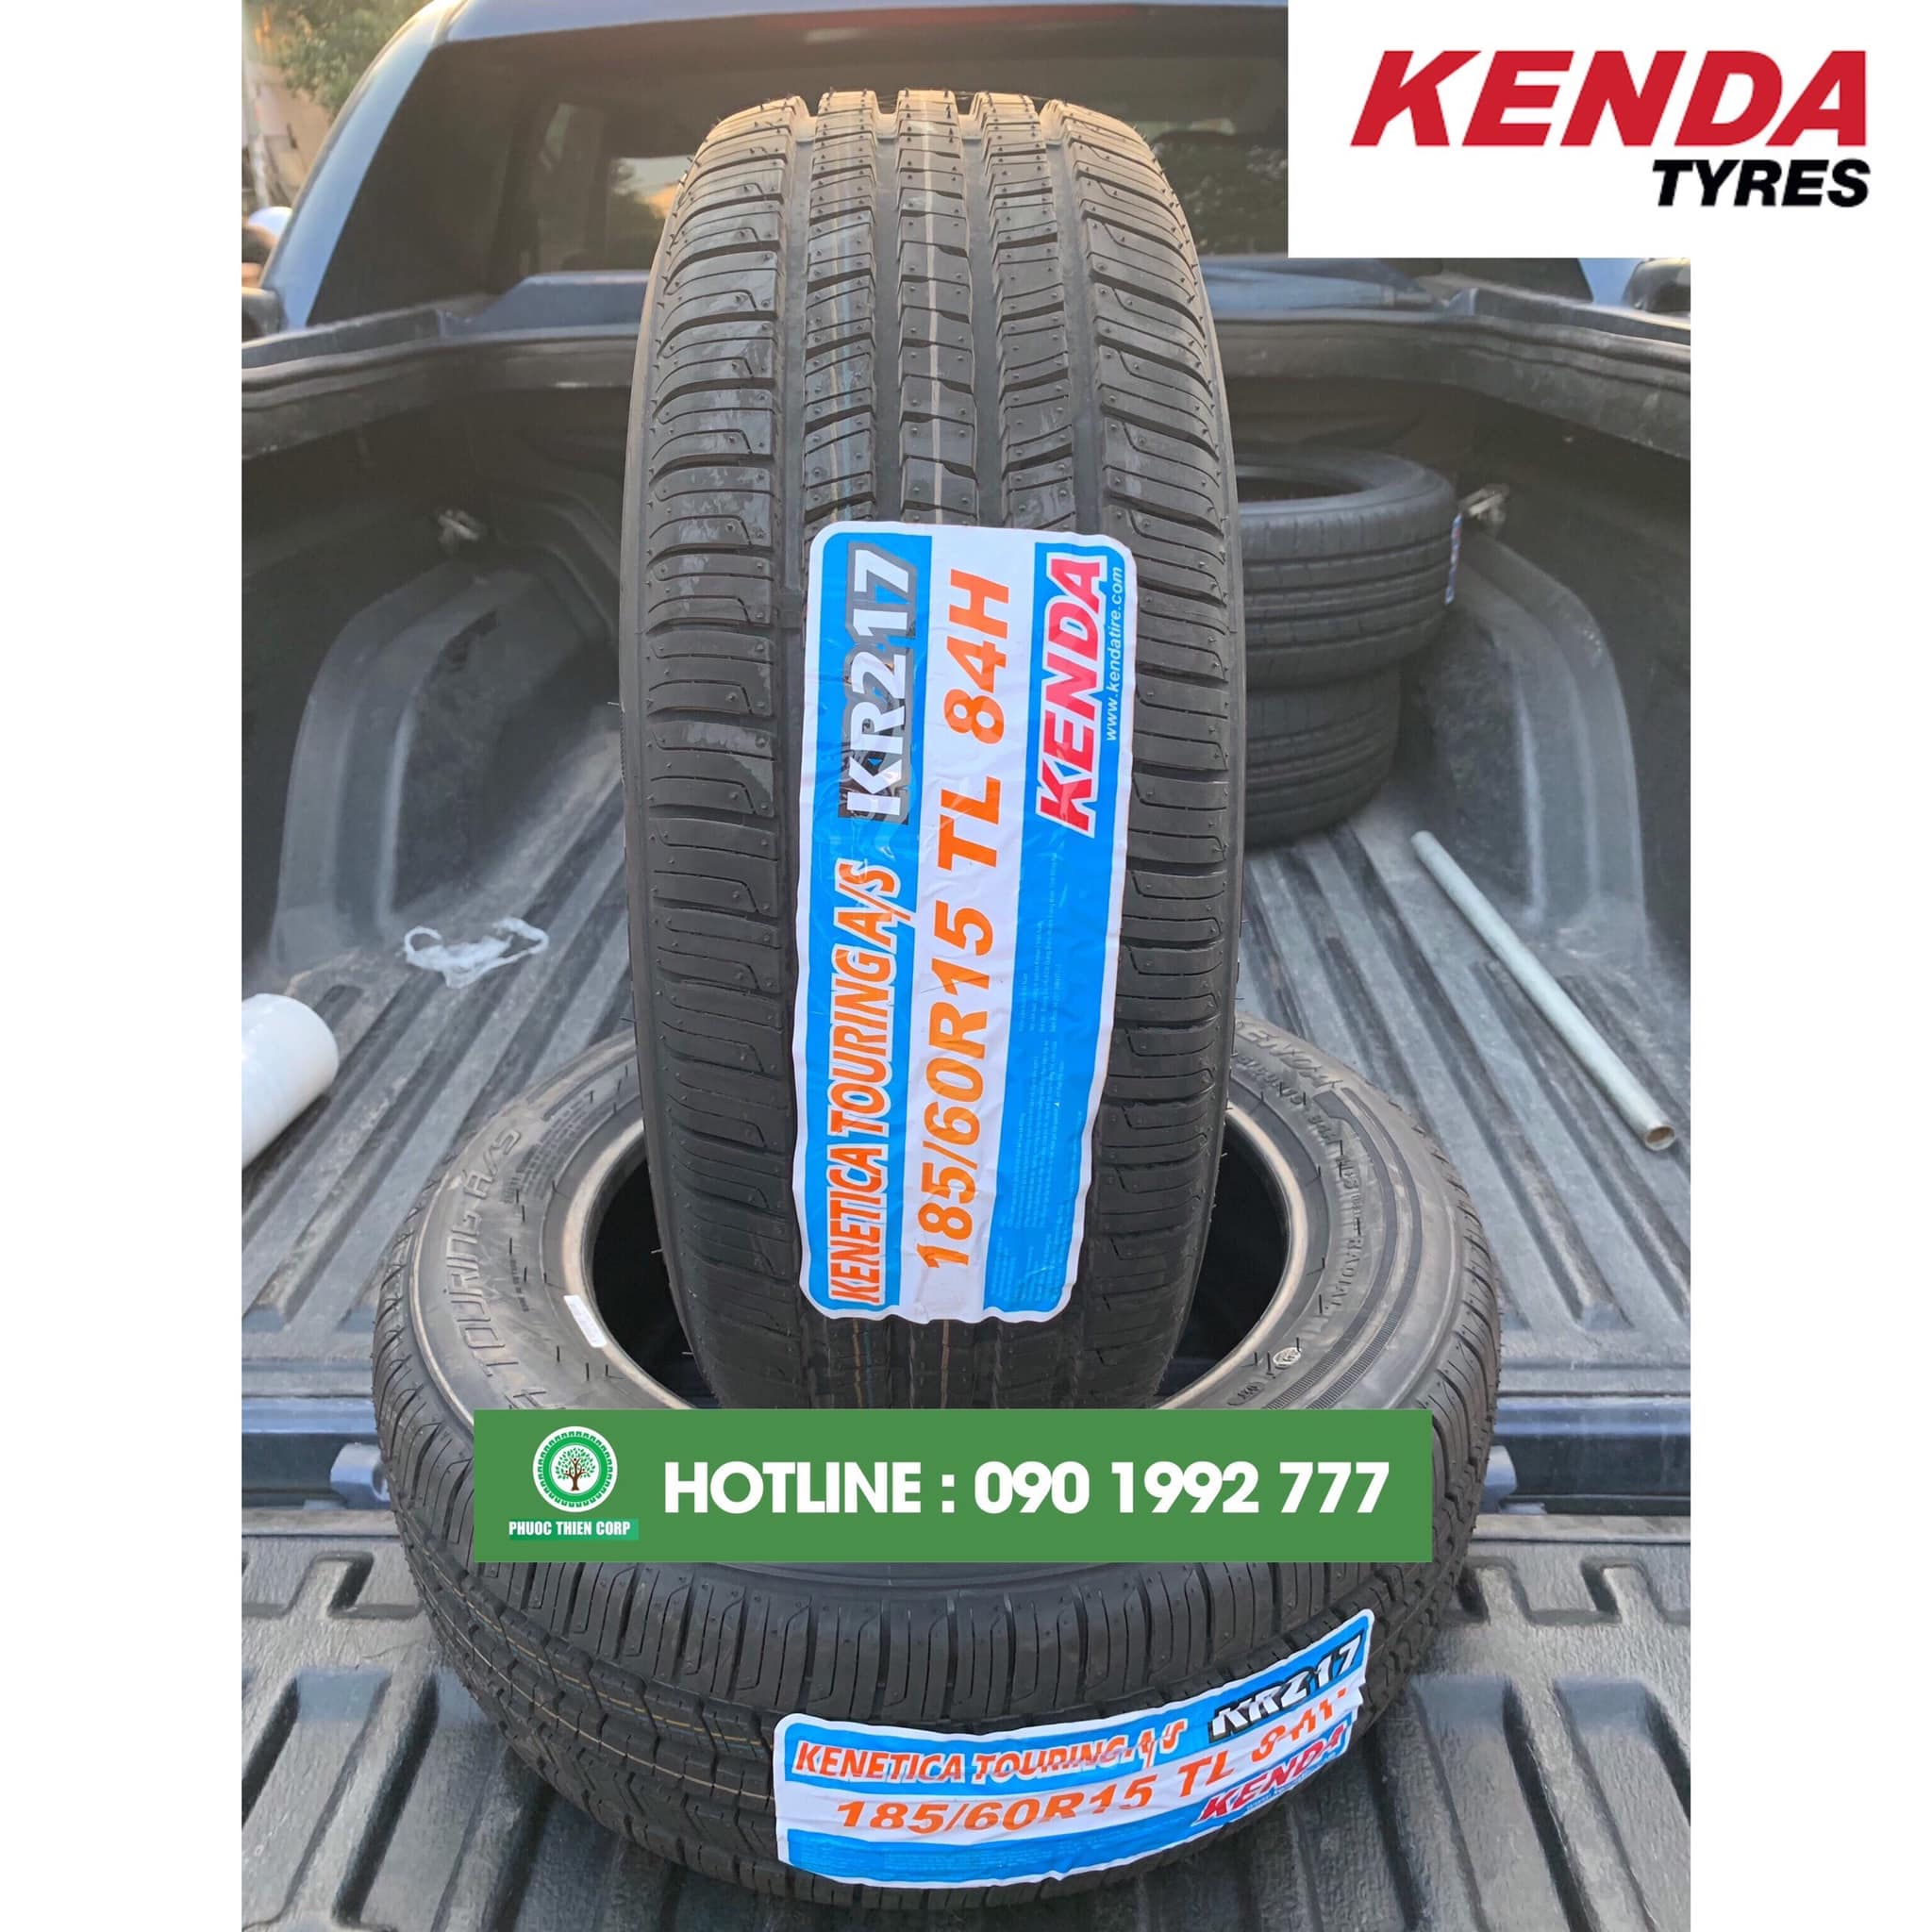 Gợi ý : Thay lốp KENDA cho xe Hyundai i20